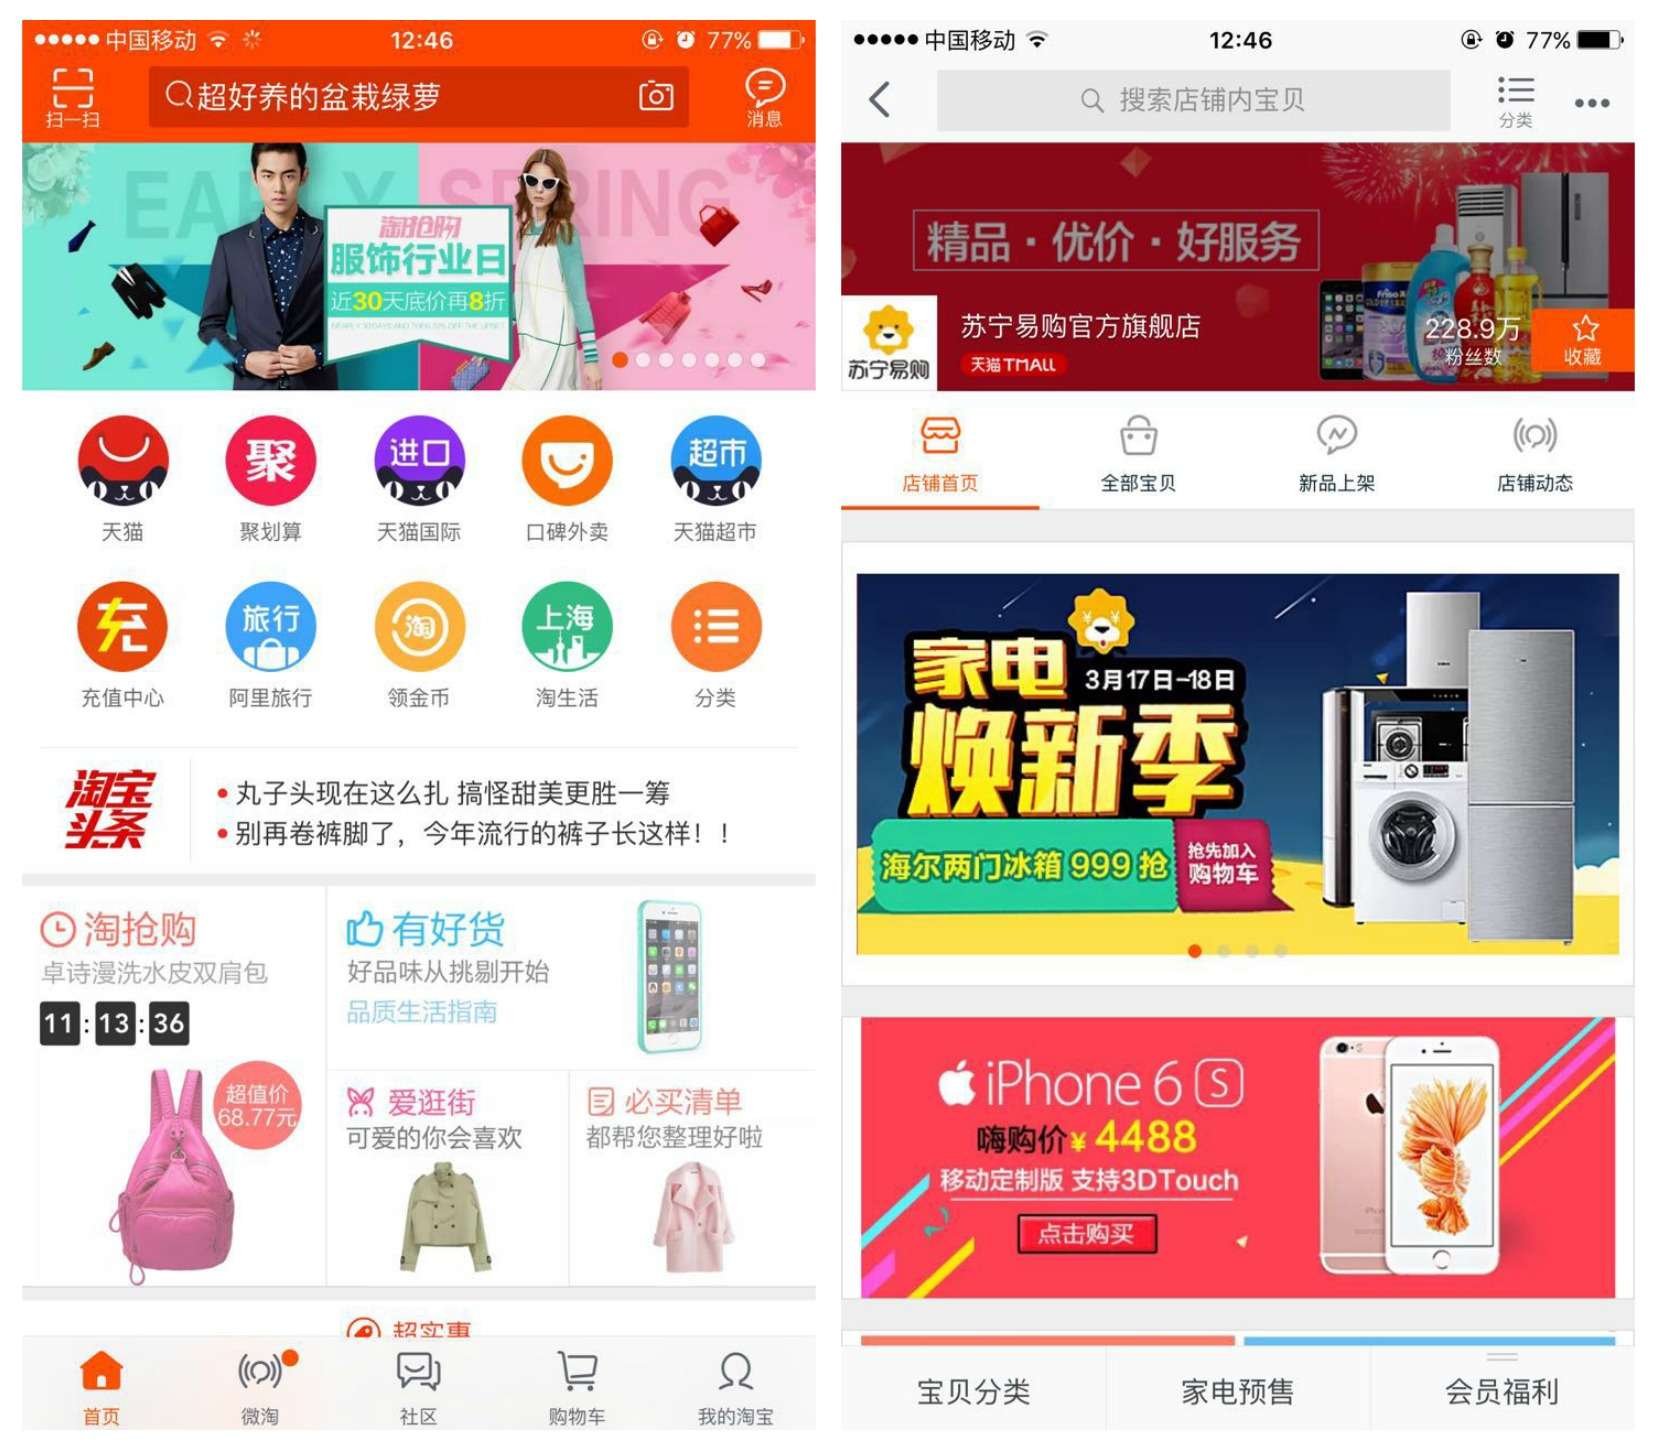 Taobao CDN Logo - In China, Taobao is like Amazon, but bigger and faster